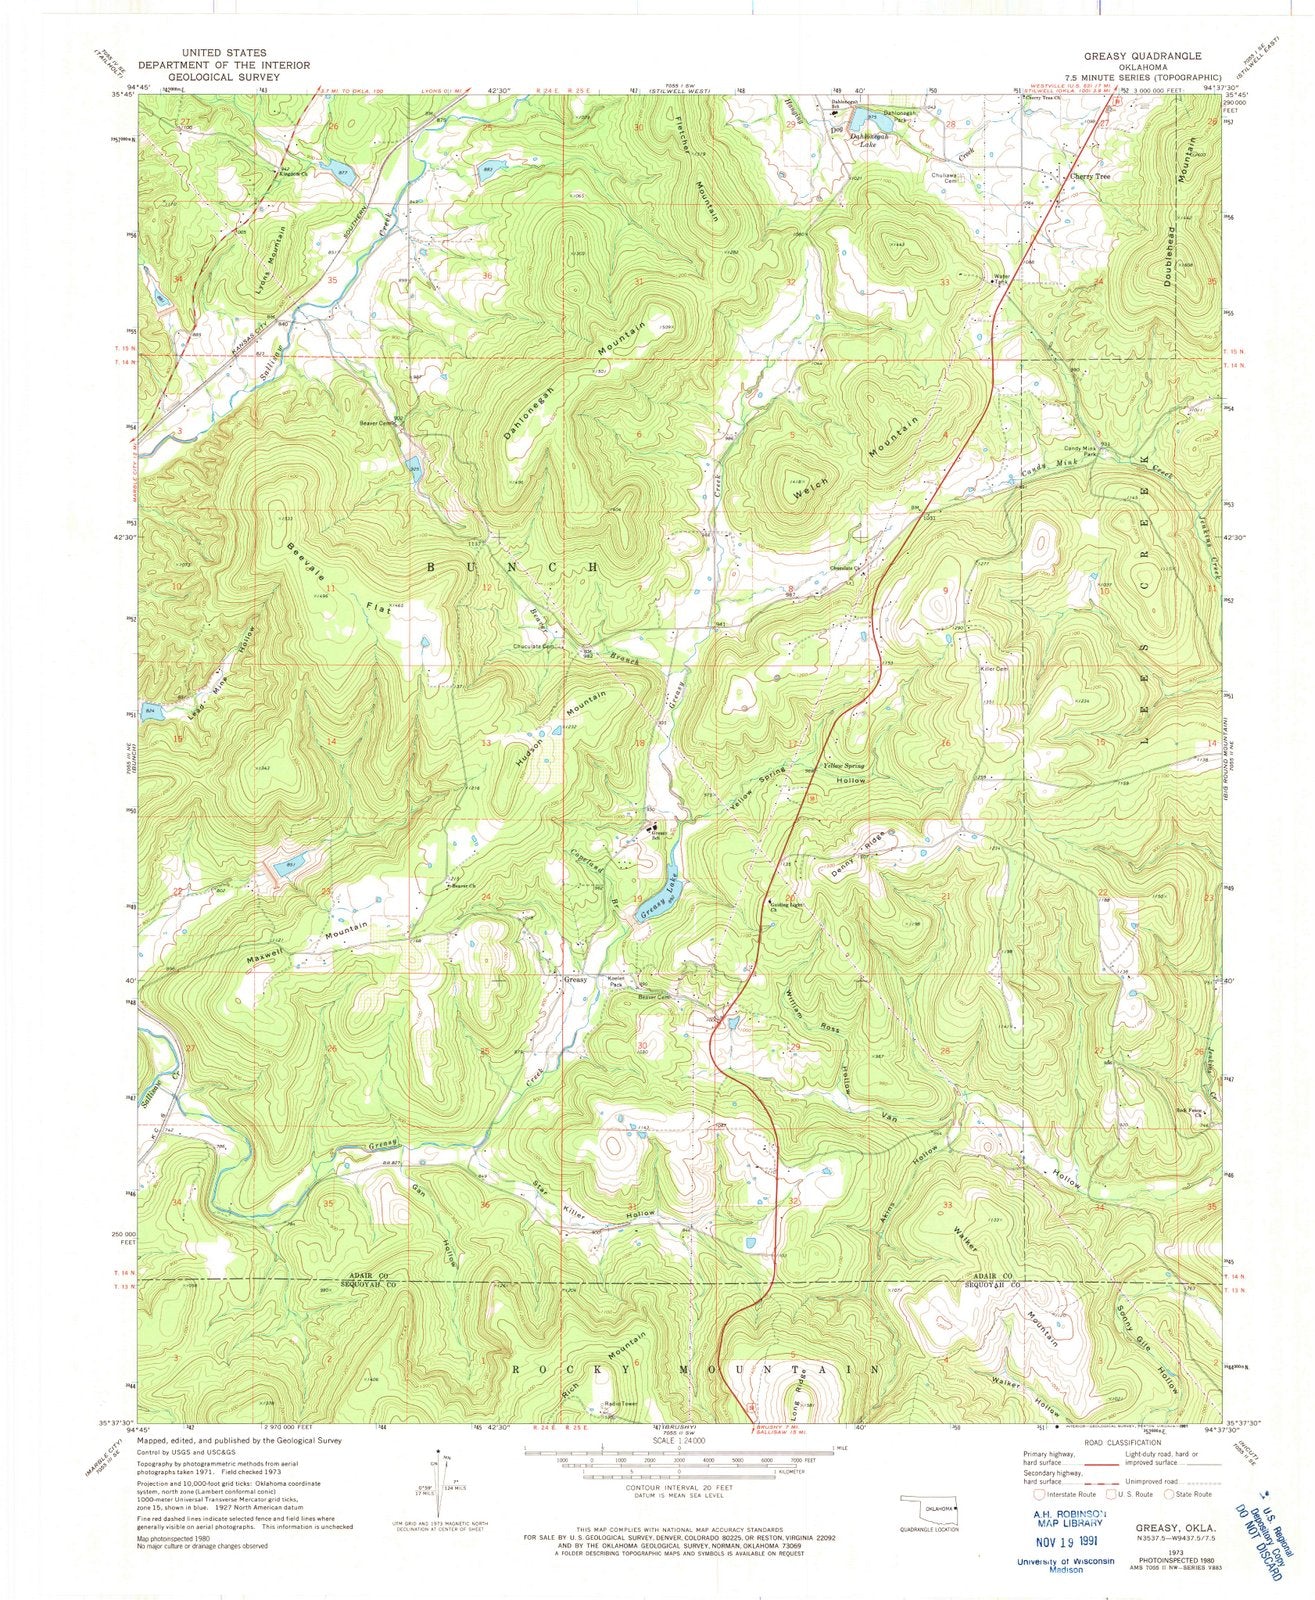 1973 Greasy, OK - Oklahoma - USGS Topographic Map